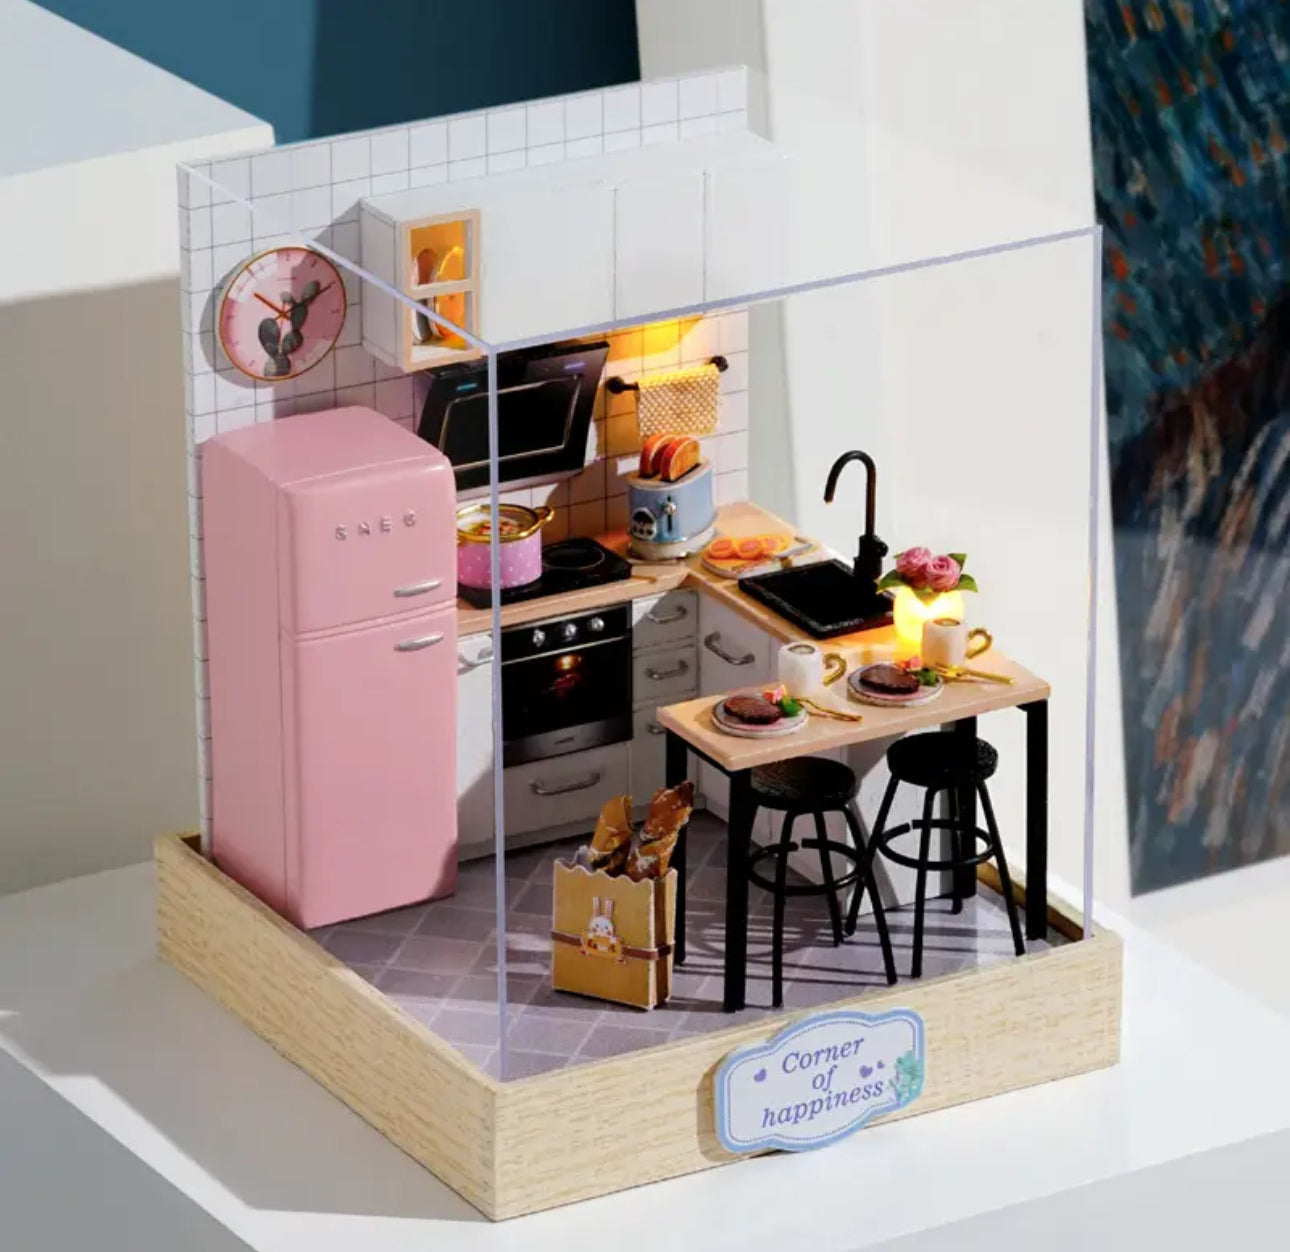 Dollhouse Miniature